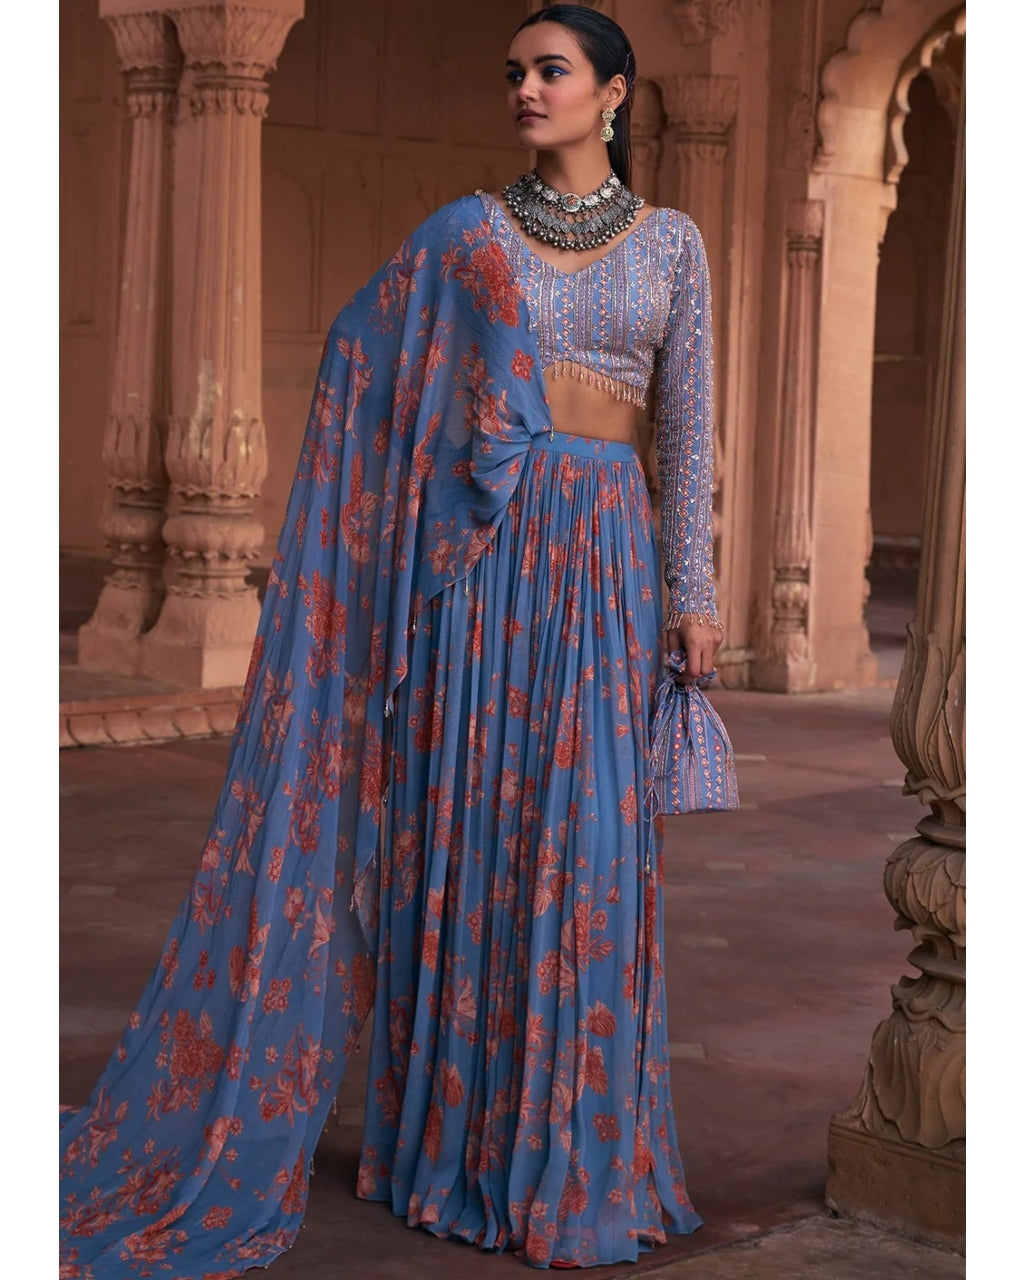 Slate Blue Floral Print And Highlighted Lehenga Sari Set